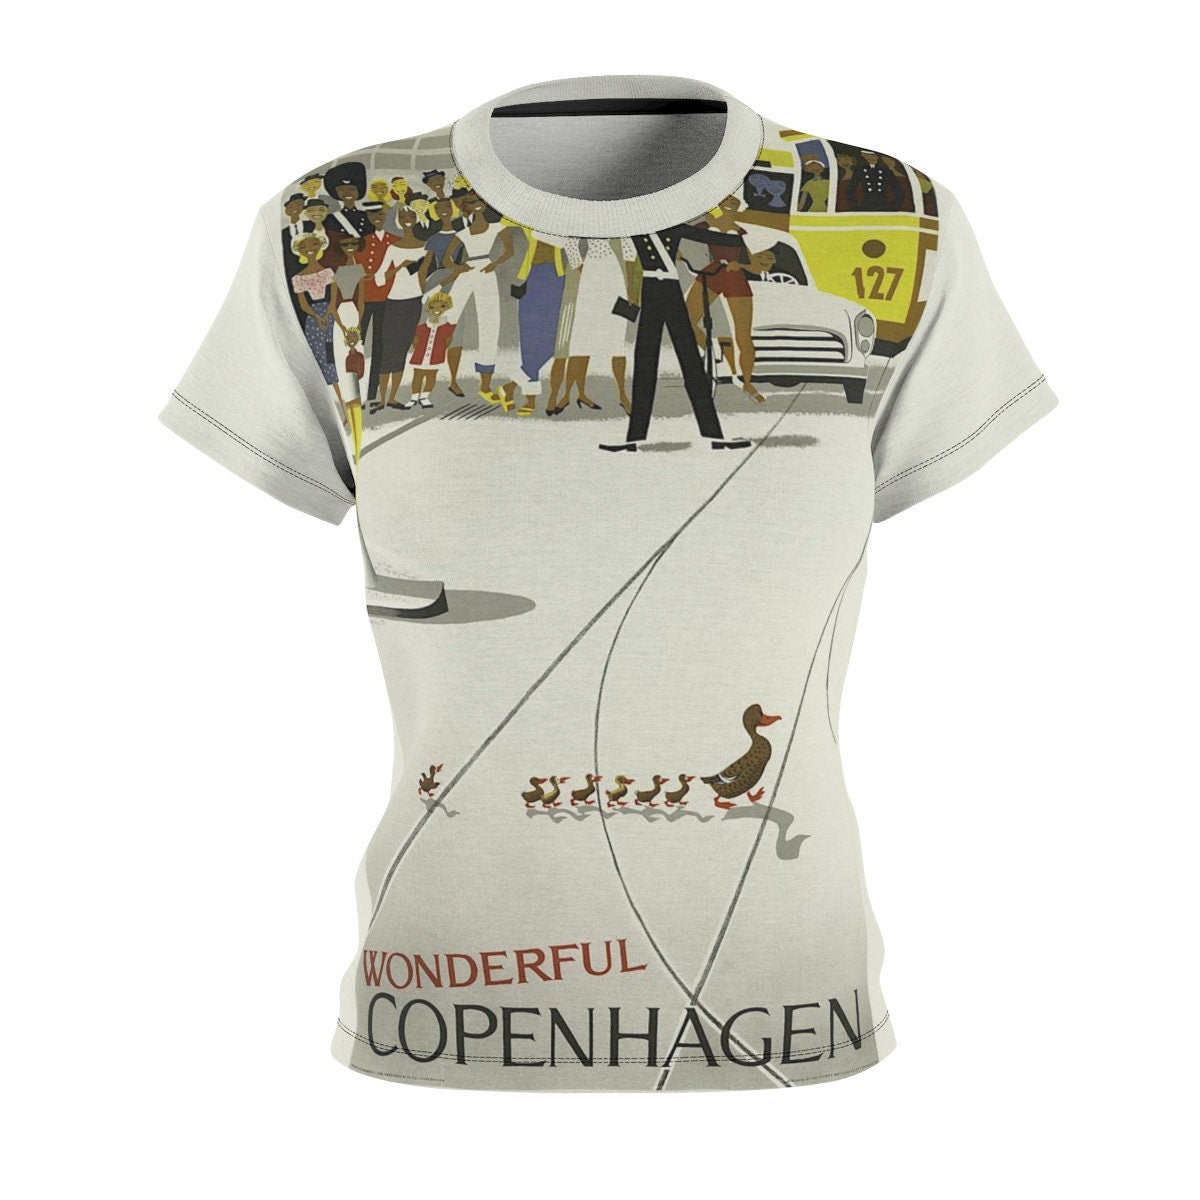 Tee Shirt /Copenhagen /Women /Denmark /T-shirt /Tee /Shirt /Vintage /Art /Duck /Birthday /Clothing /Gift for Her - Chloe Lambertin